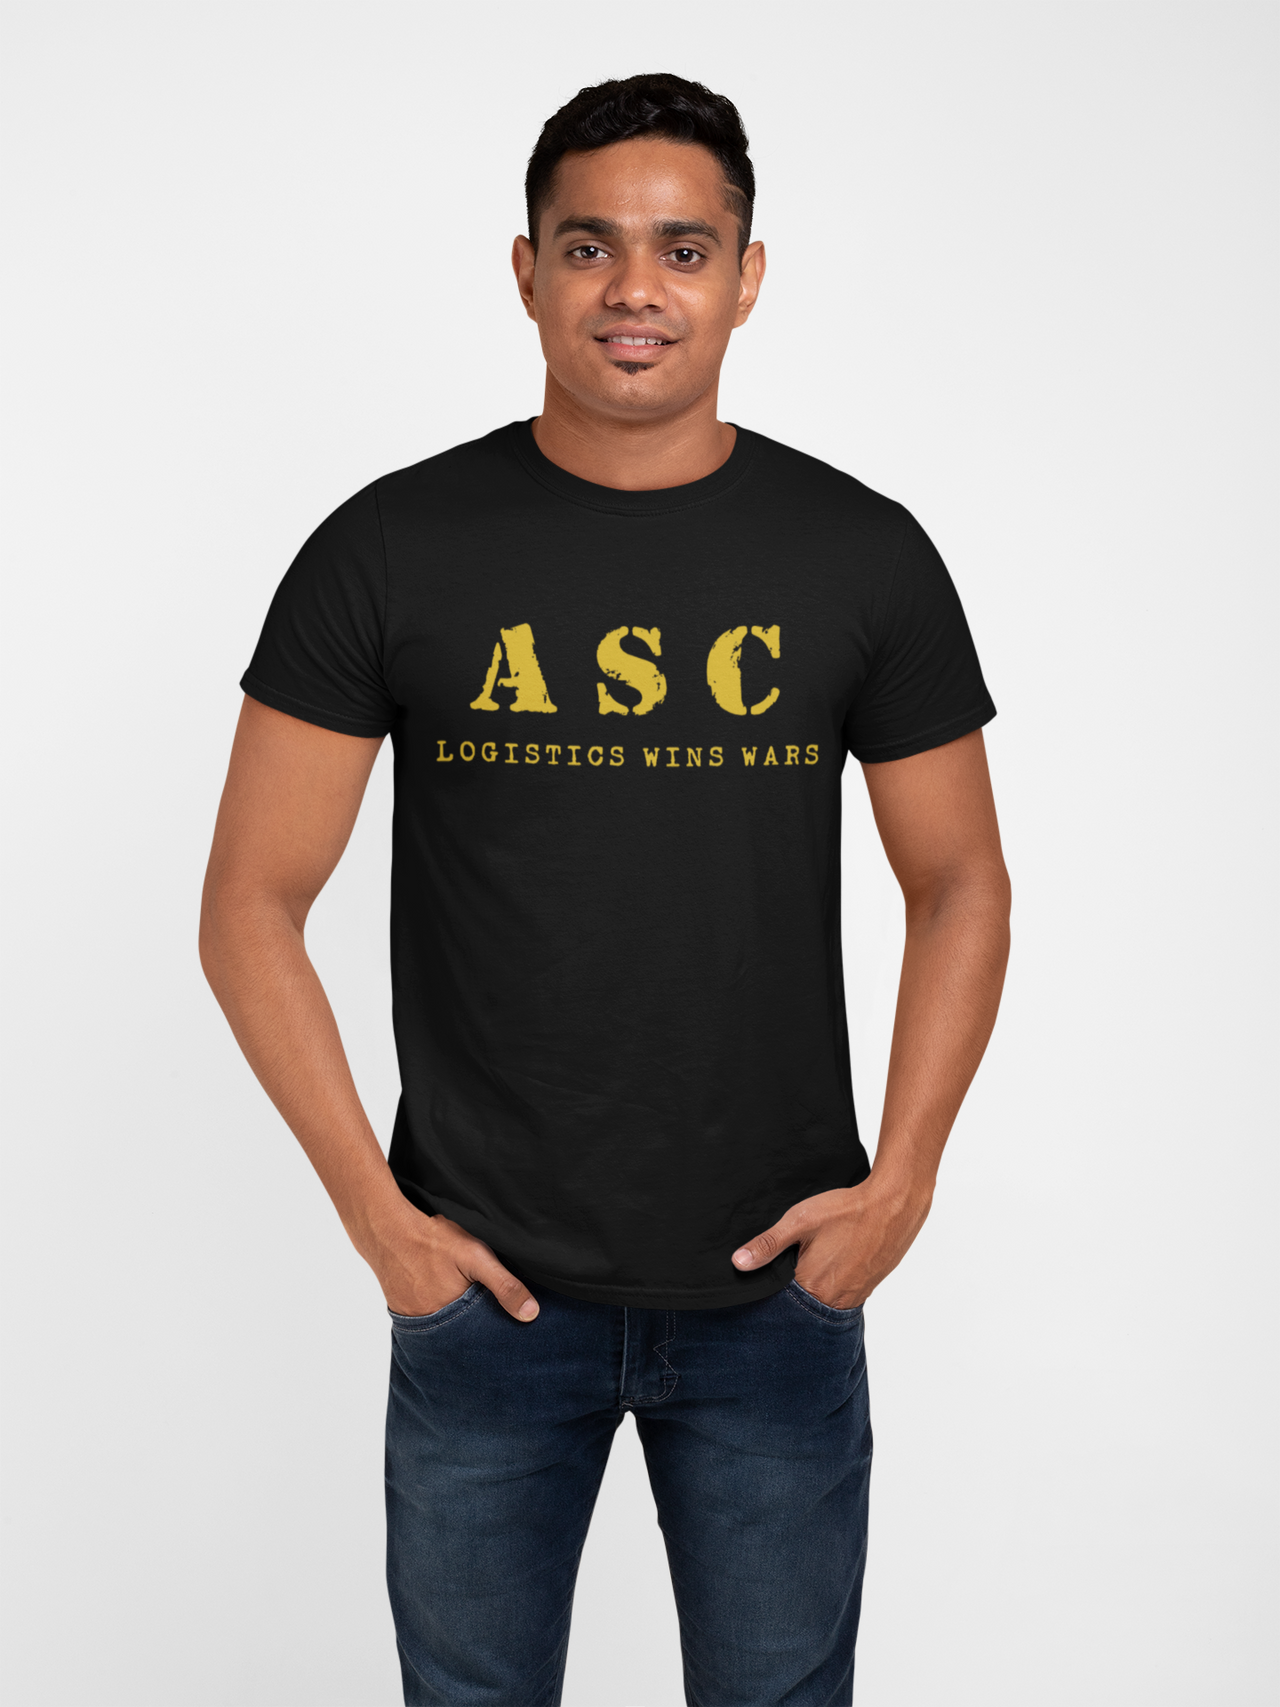 ASC T-shirt - ASC, Logistics Wins Wars (Men)